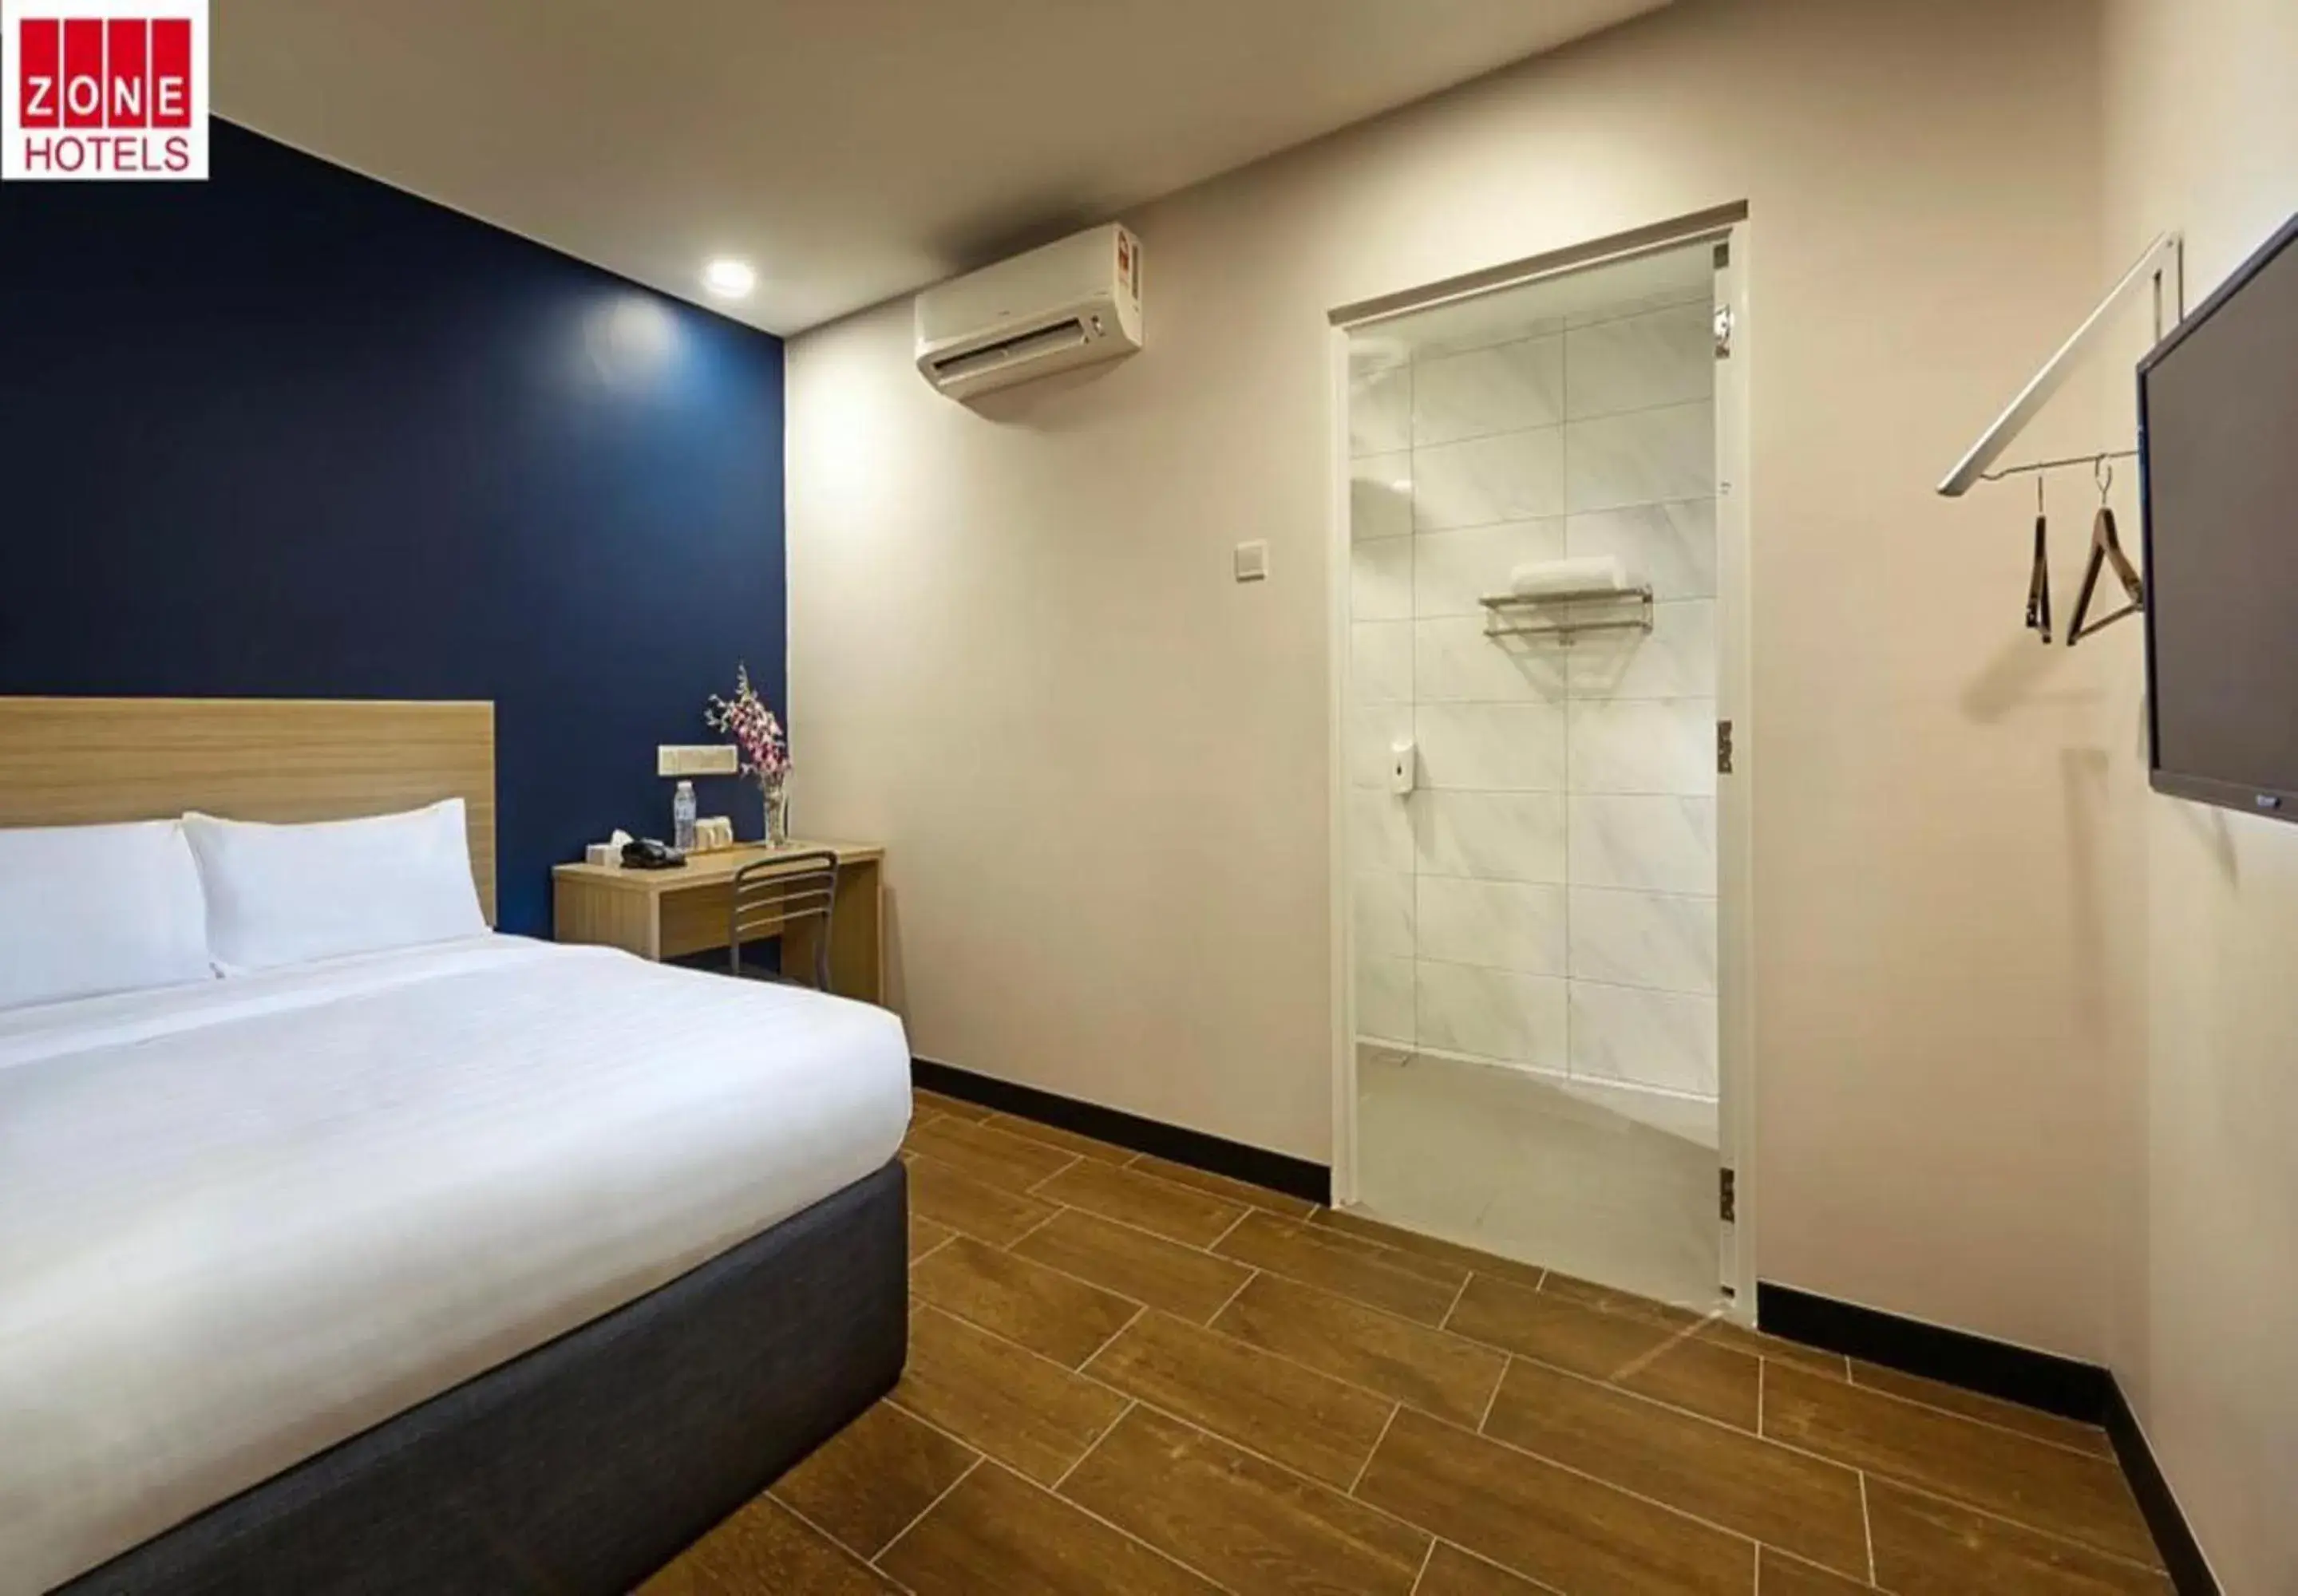 Bedroom, Bed in ZONE Hotels, Telok Panglima Garang